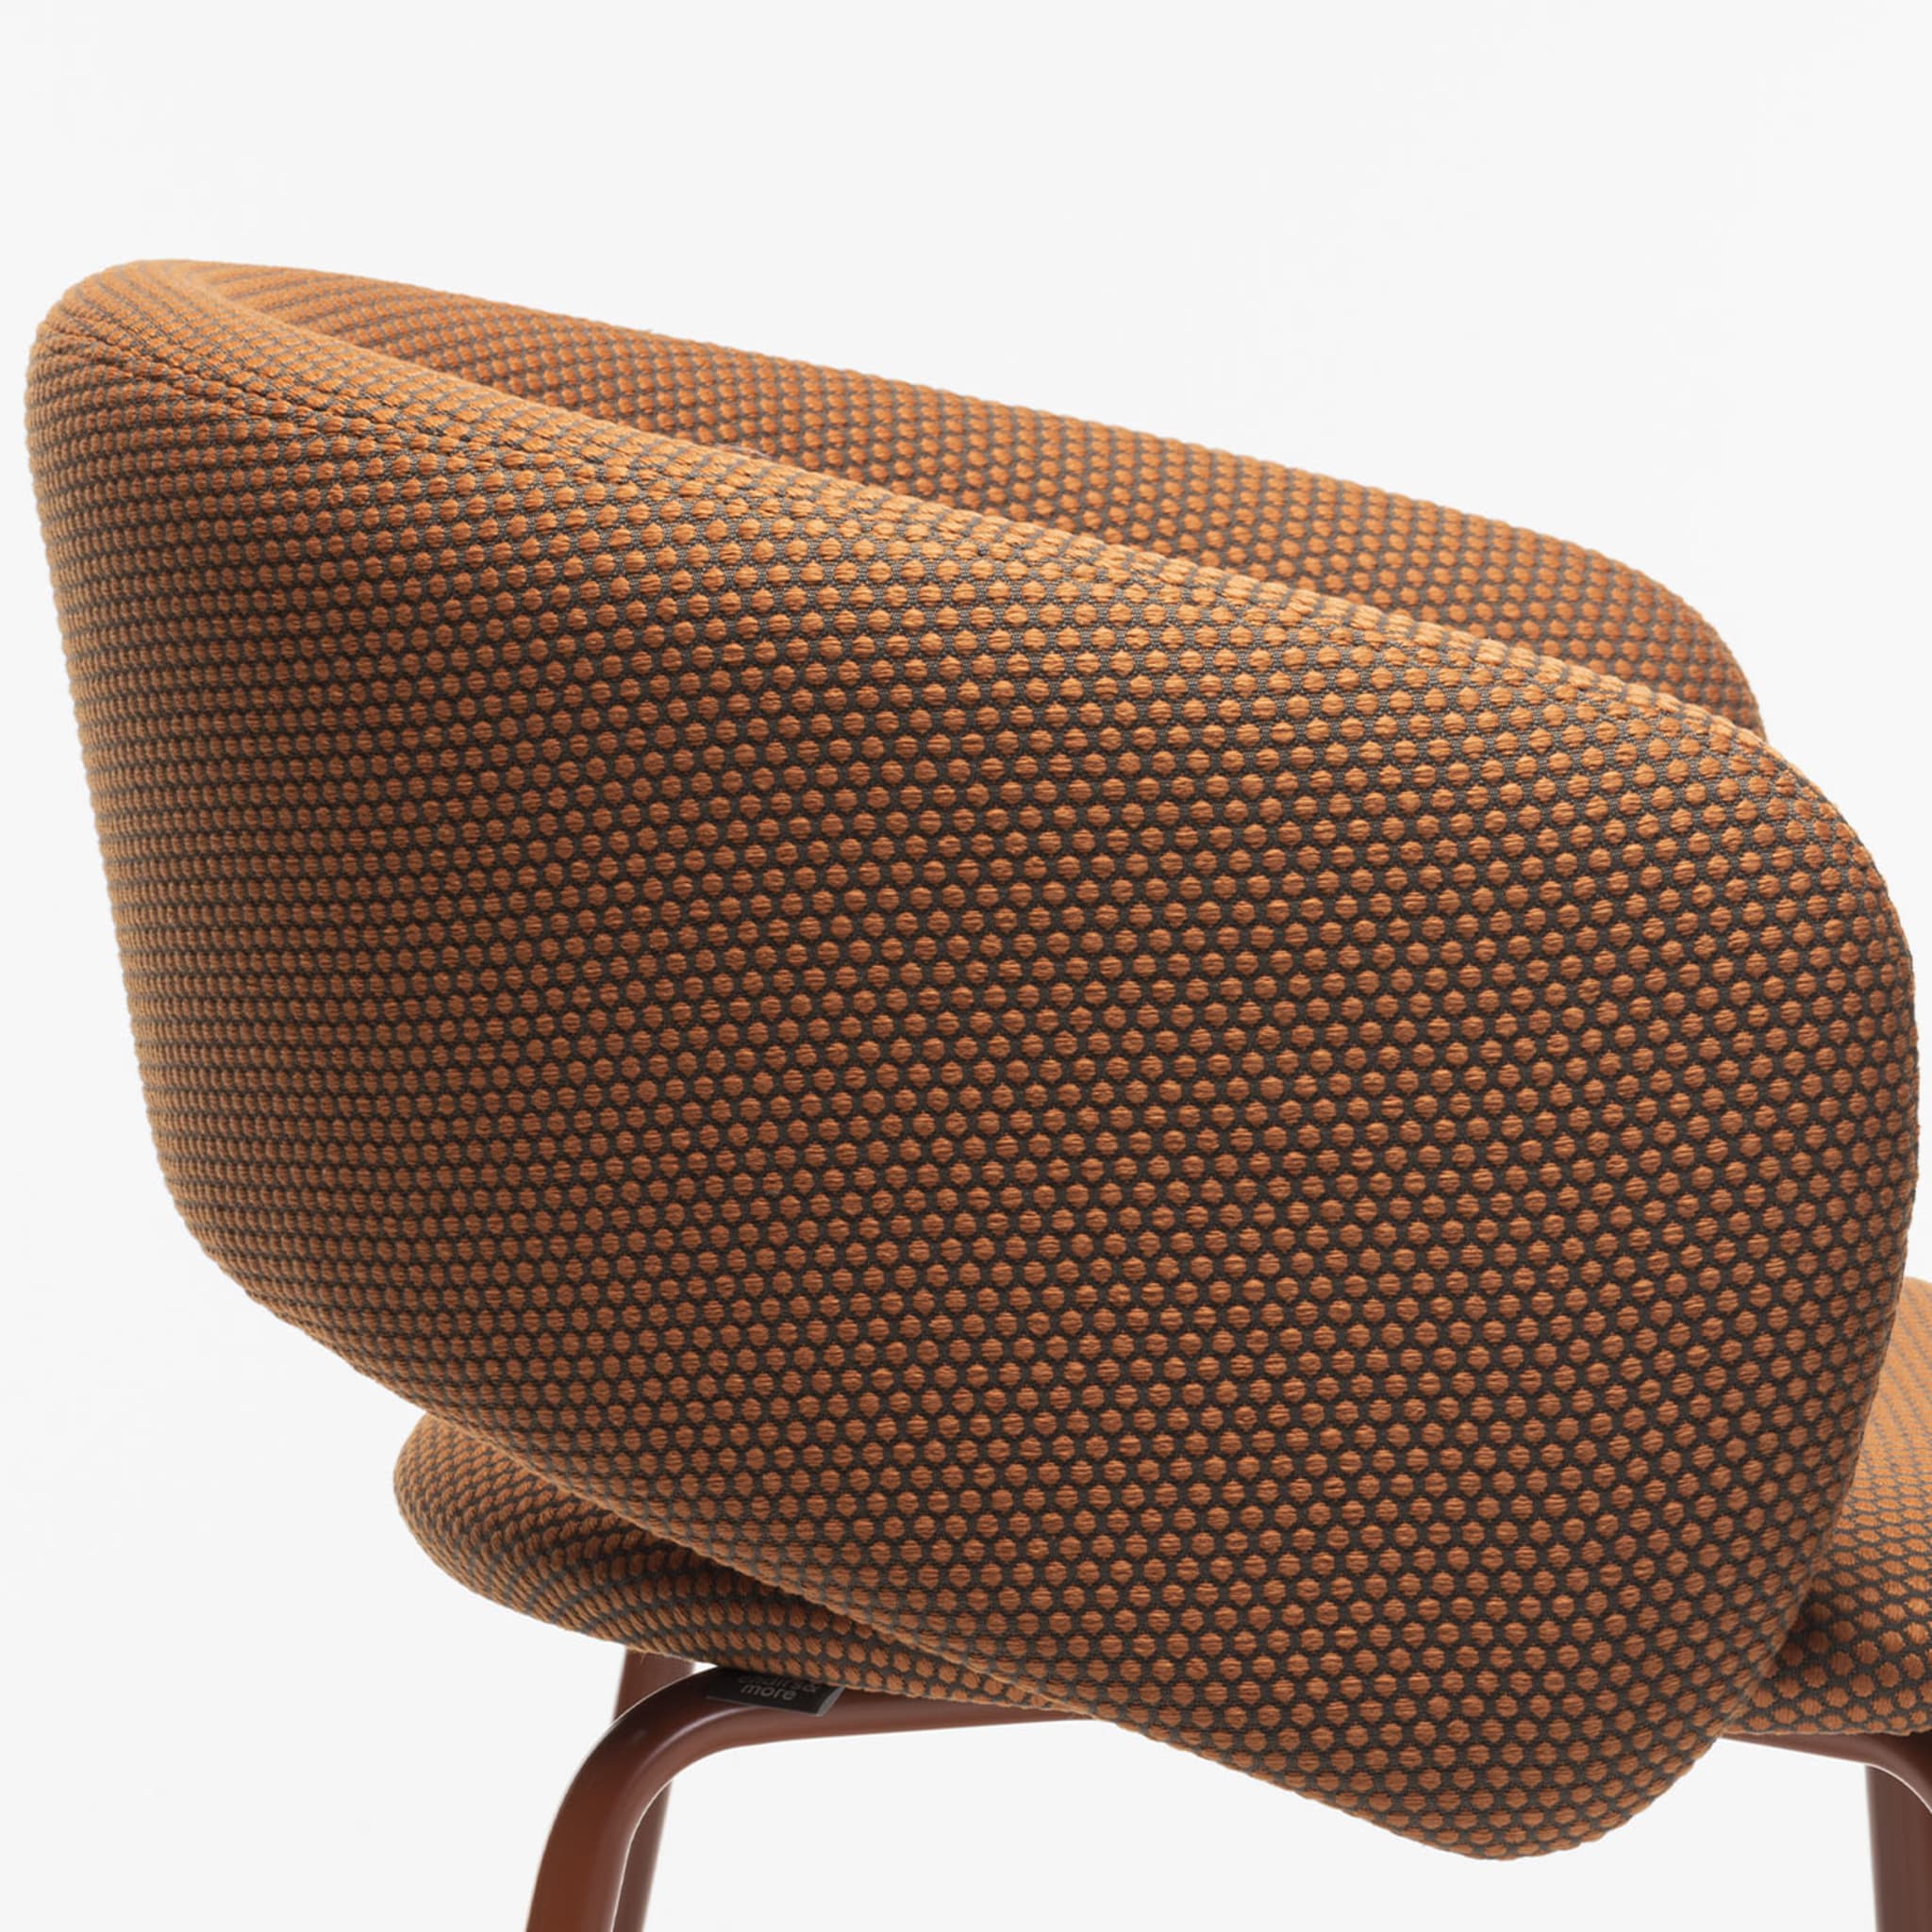 Bel M Terracotta Chair By Pablo Regano - Alternative view 3